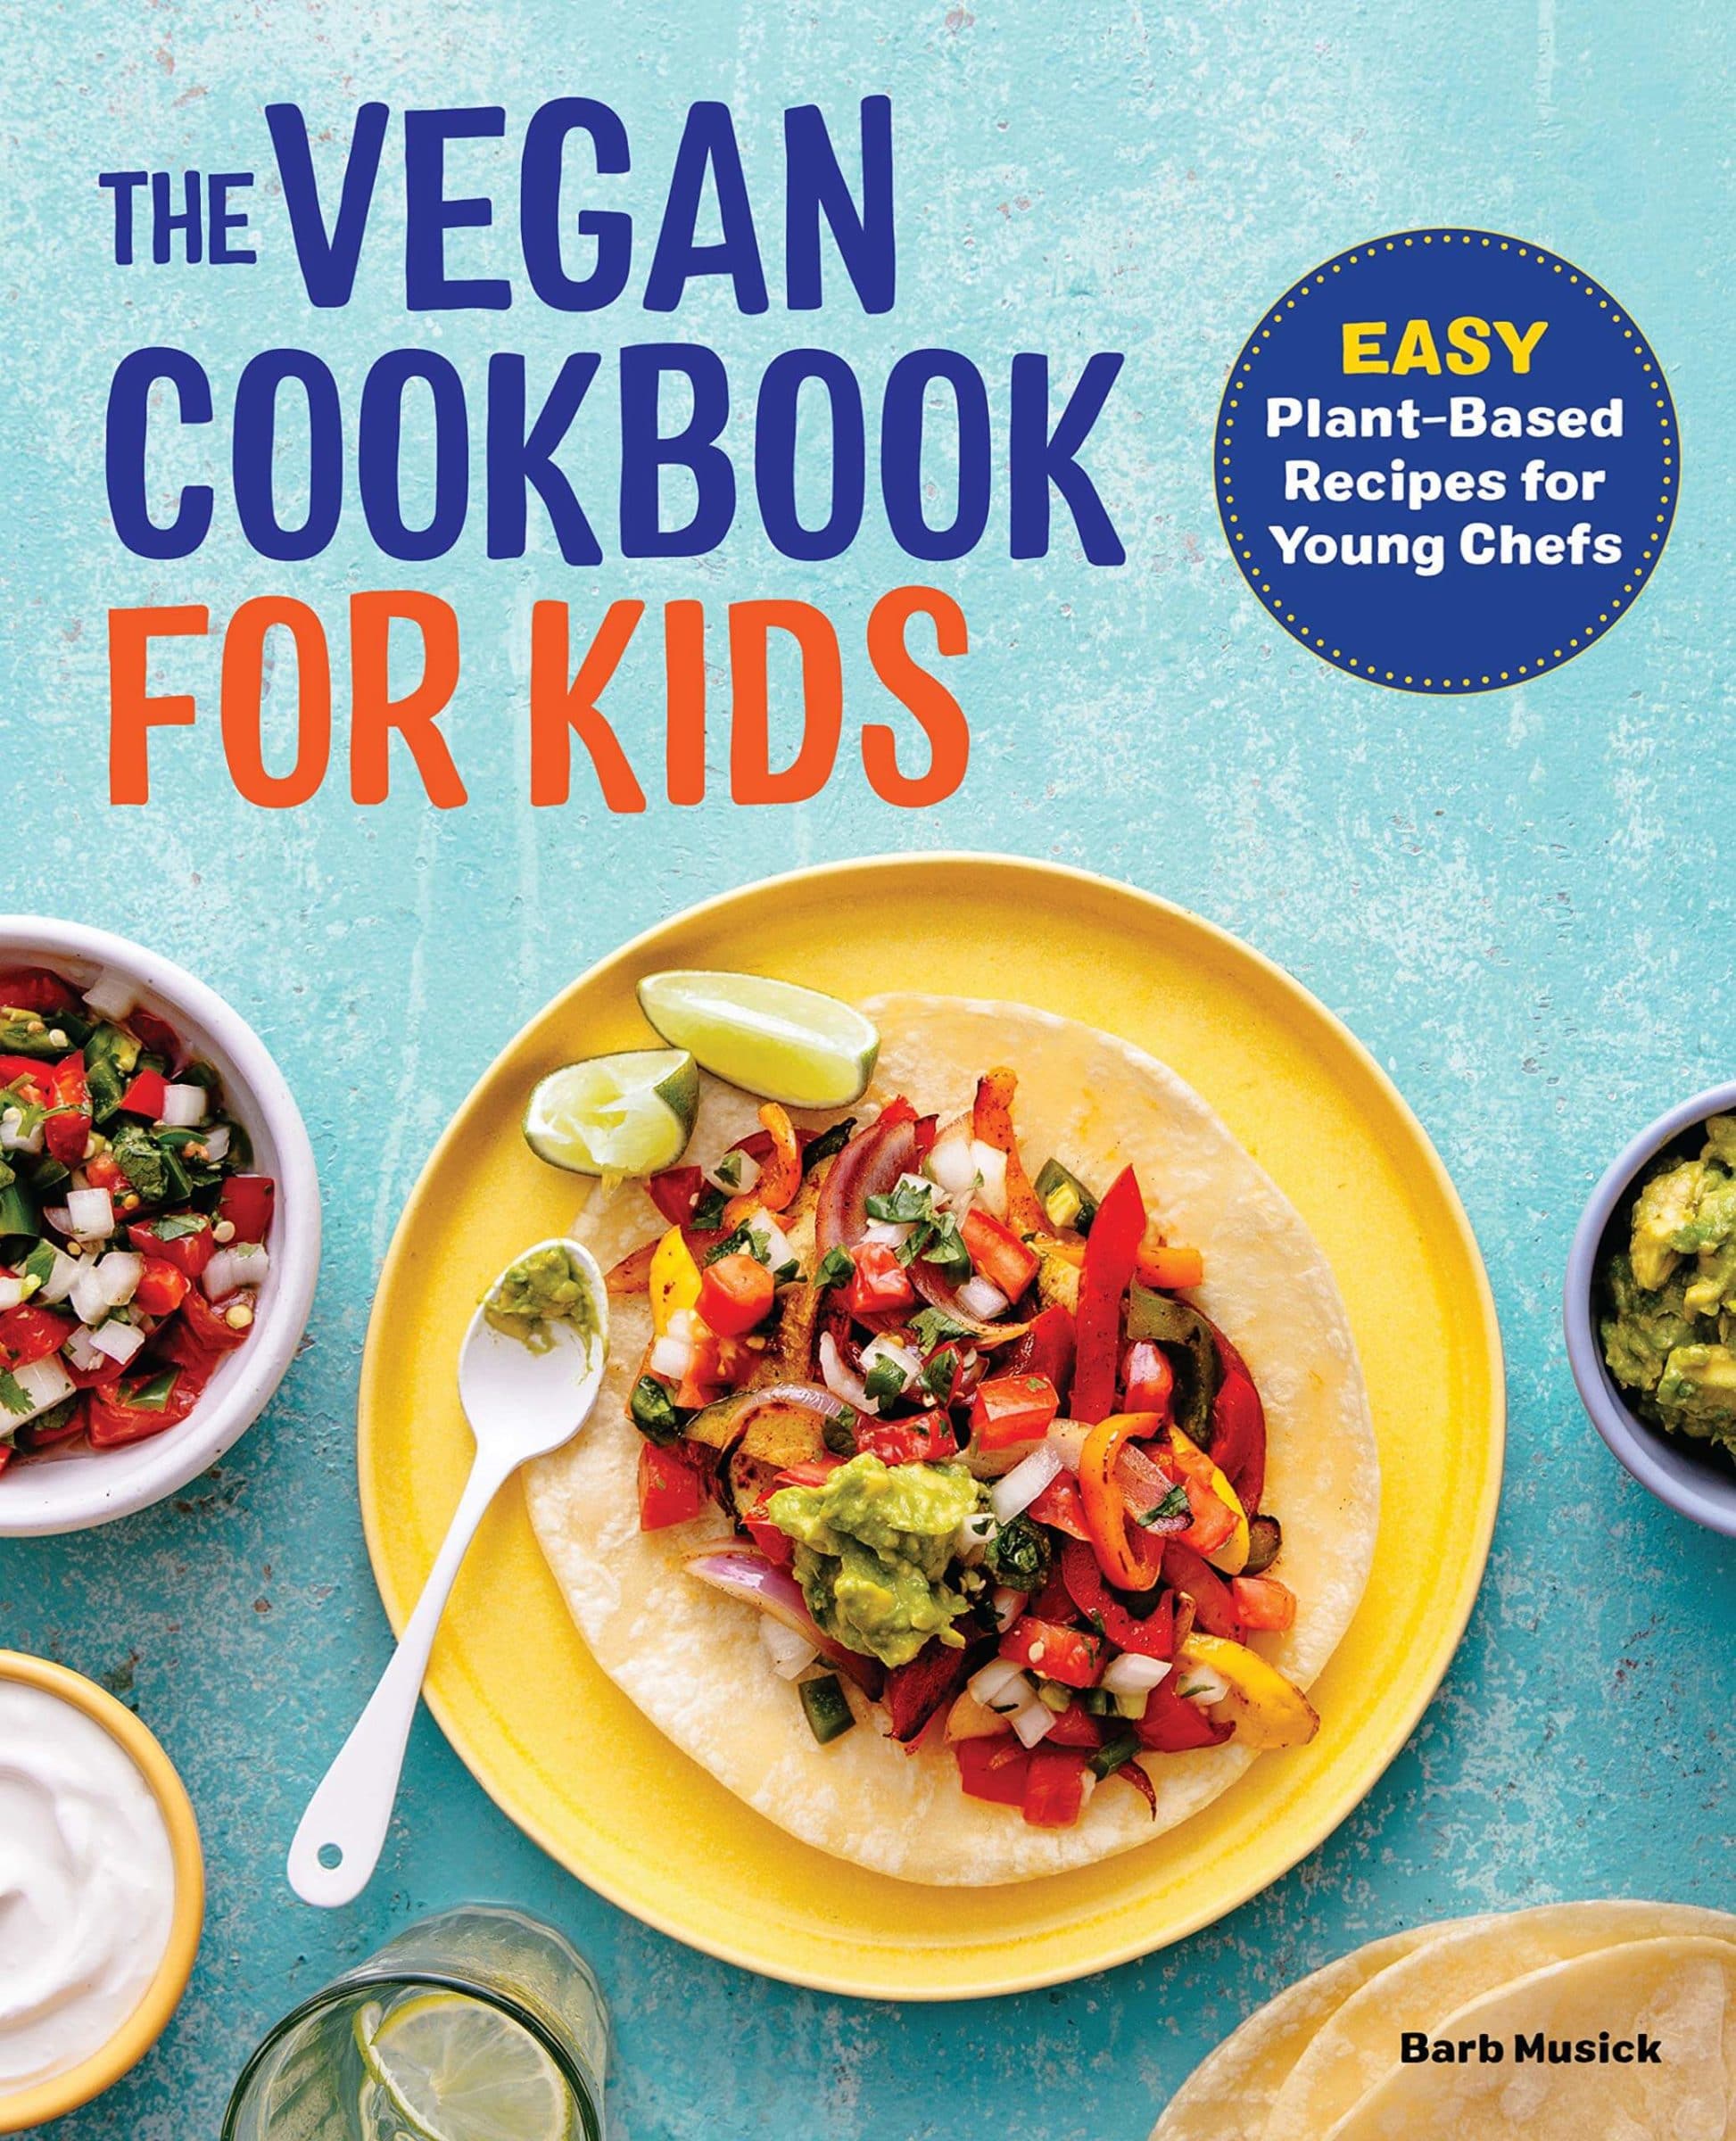 5 Vegan Parenting Books to Help Raise Thriving Plant-Based Children